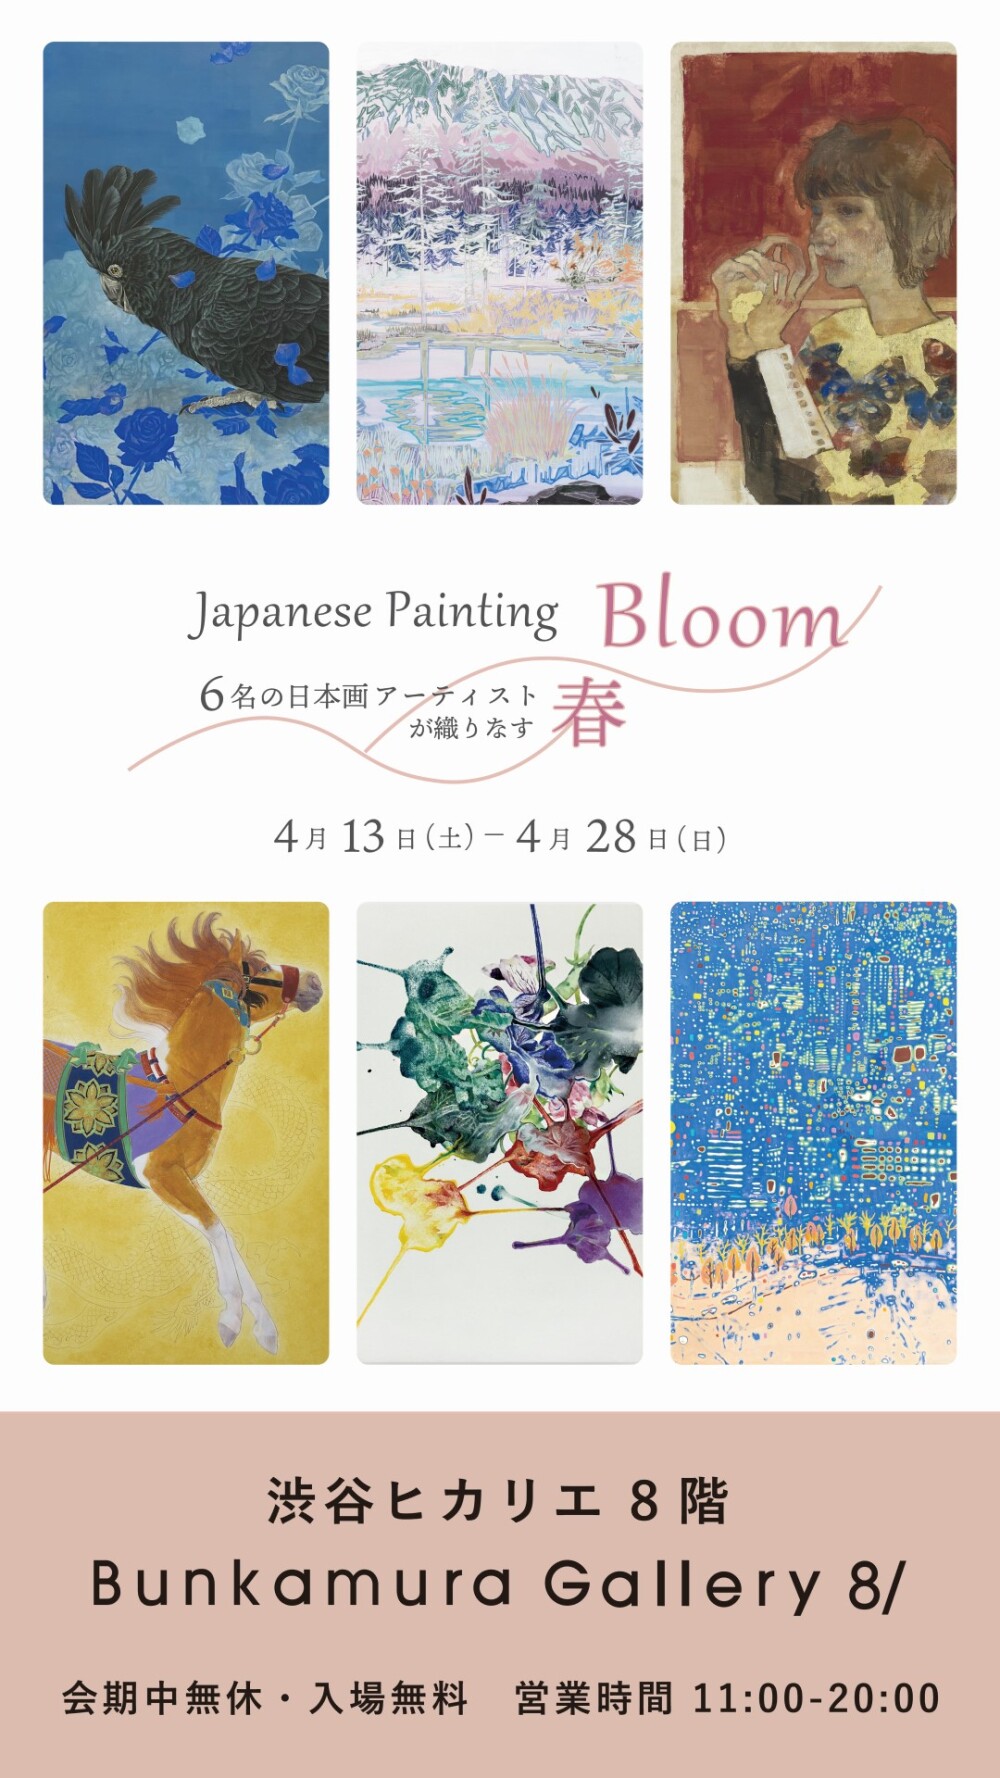 Japanese Painting Bloom